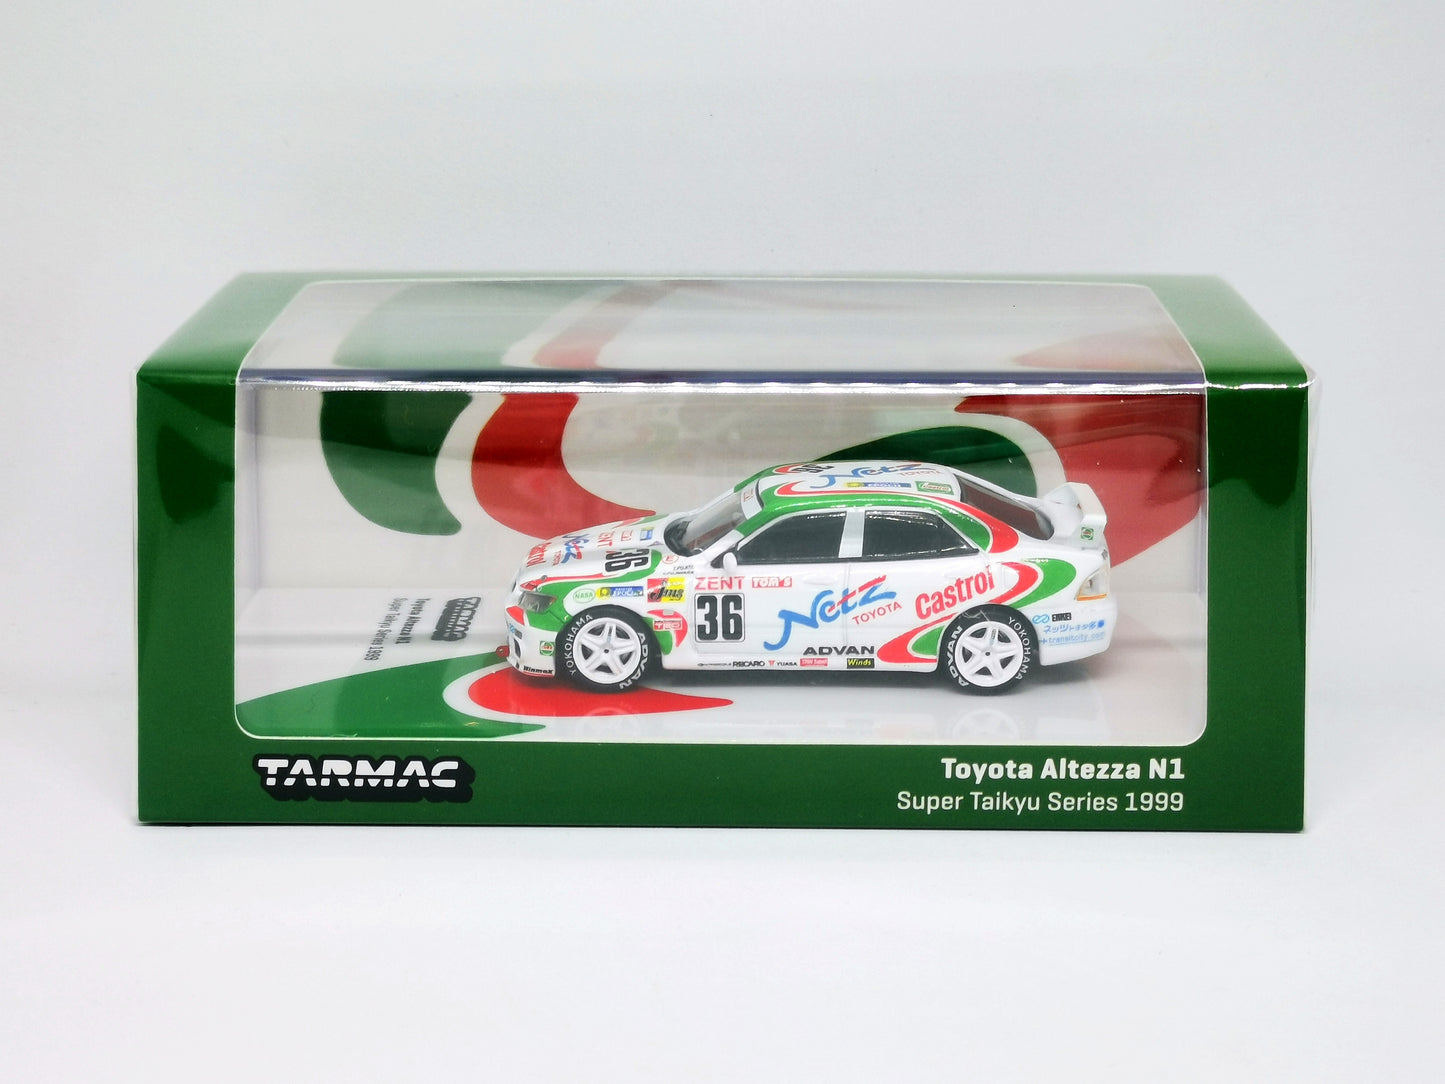 Tarmac Works Toyota Altezza N1
Super Taikyu Series 1999